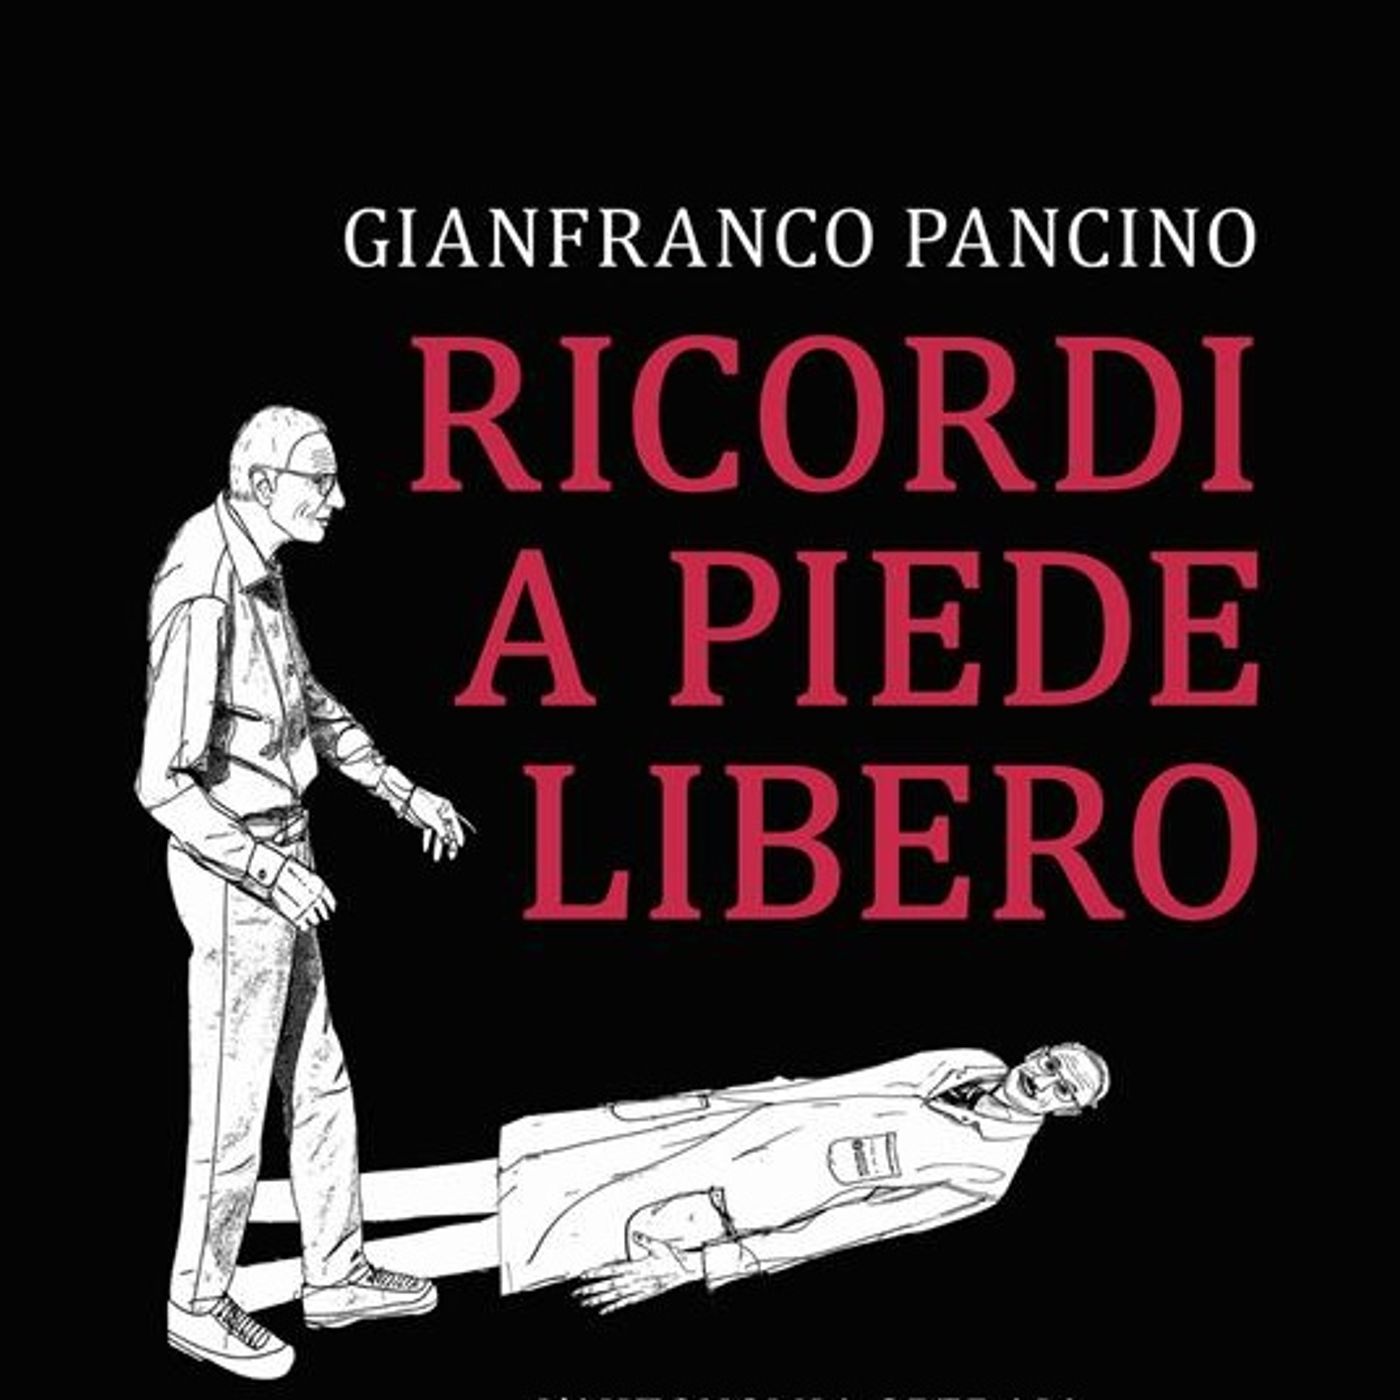 Gianfranco Pancino "Ricordi a piede libero"